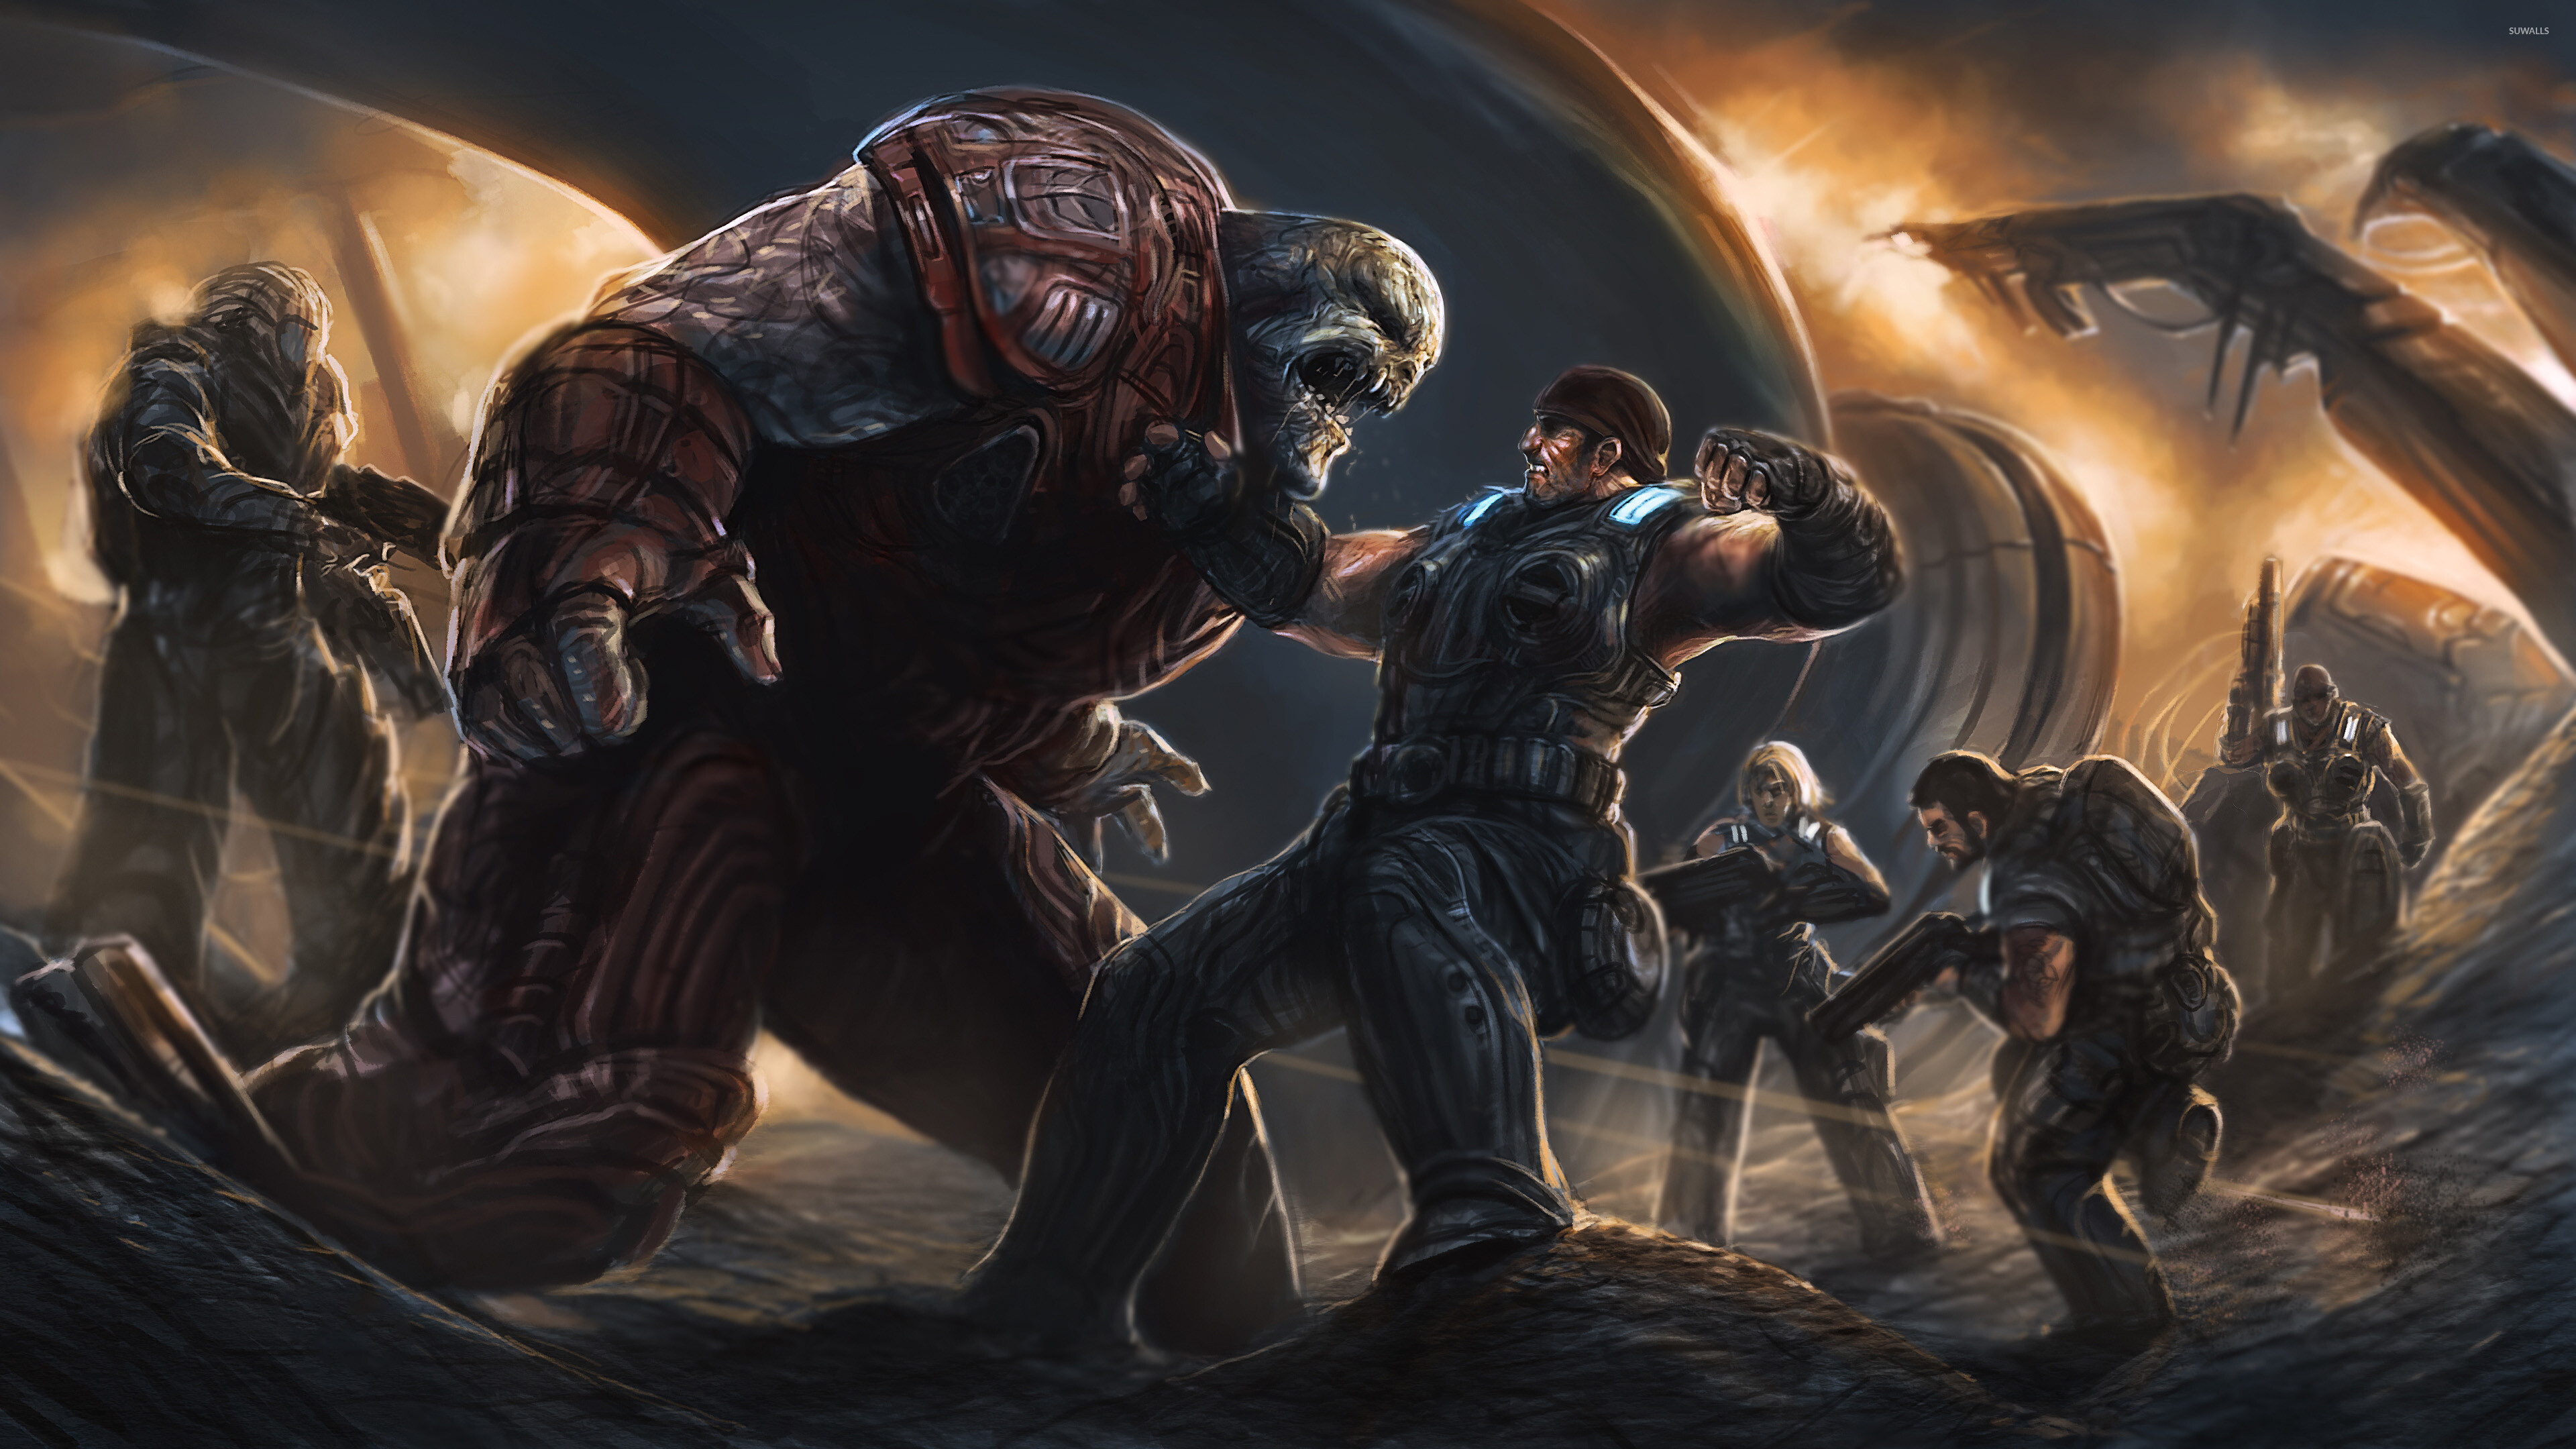 Gears of War: Marcus Fenix, Locust Horde, The world of Sera, Locust War, Delta Squad. 3840x2160 4K Background.